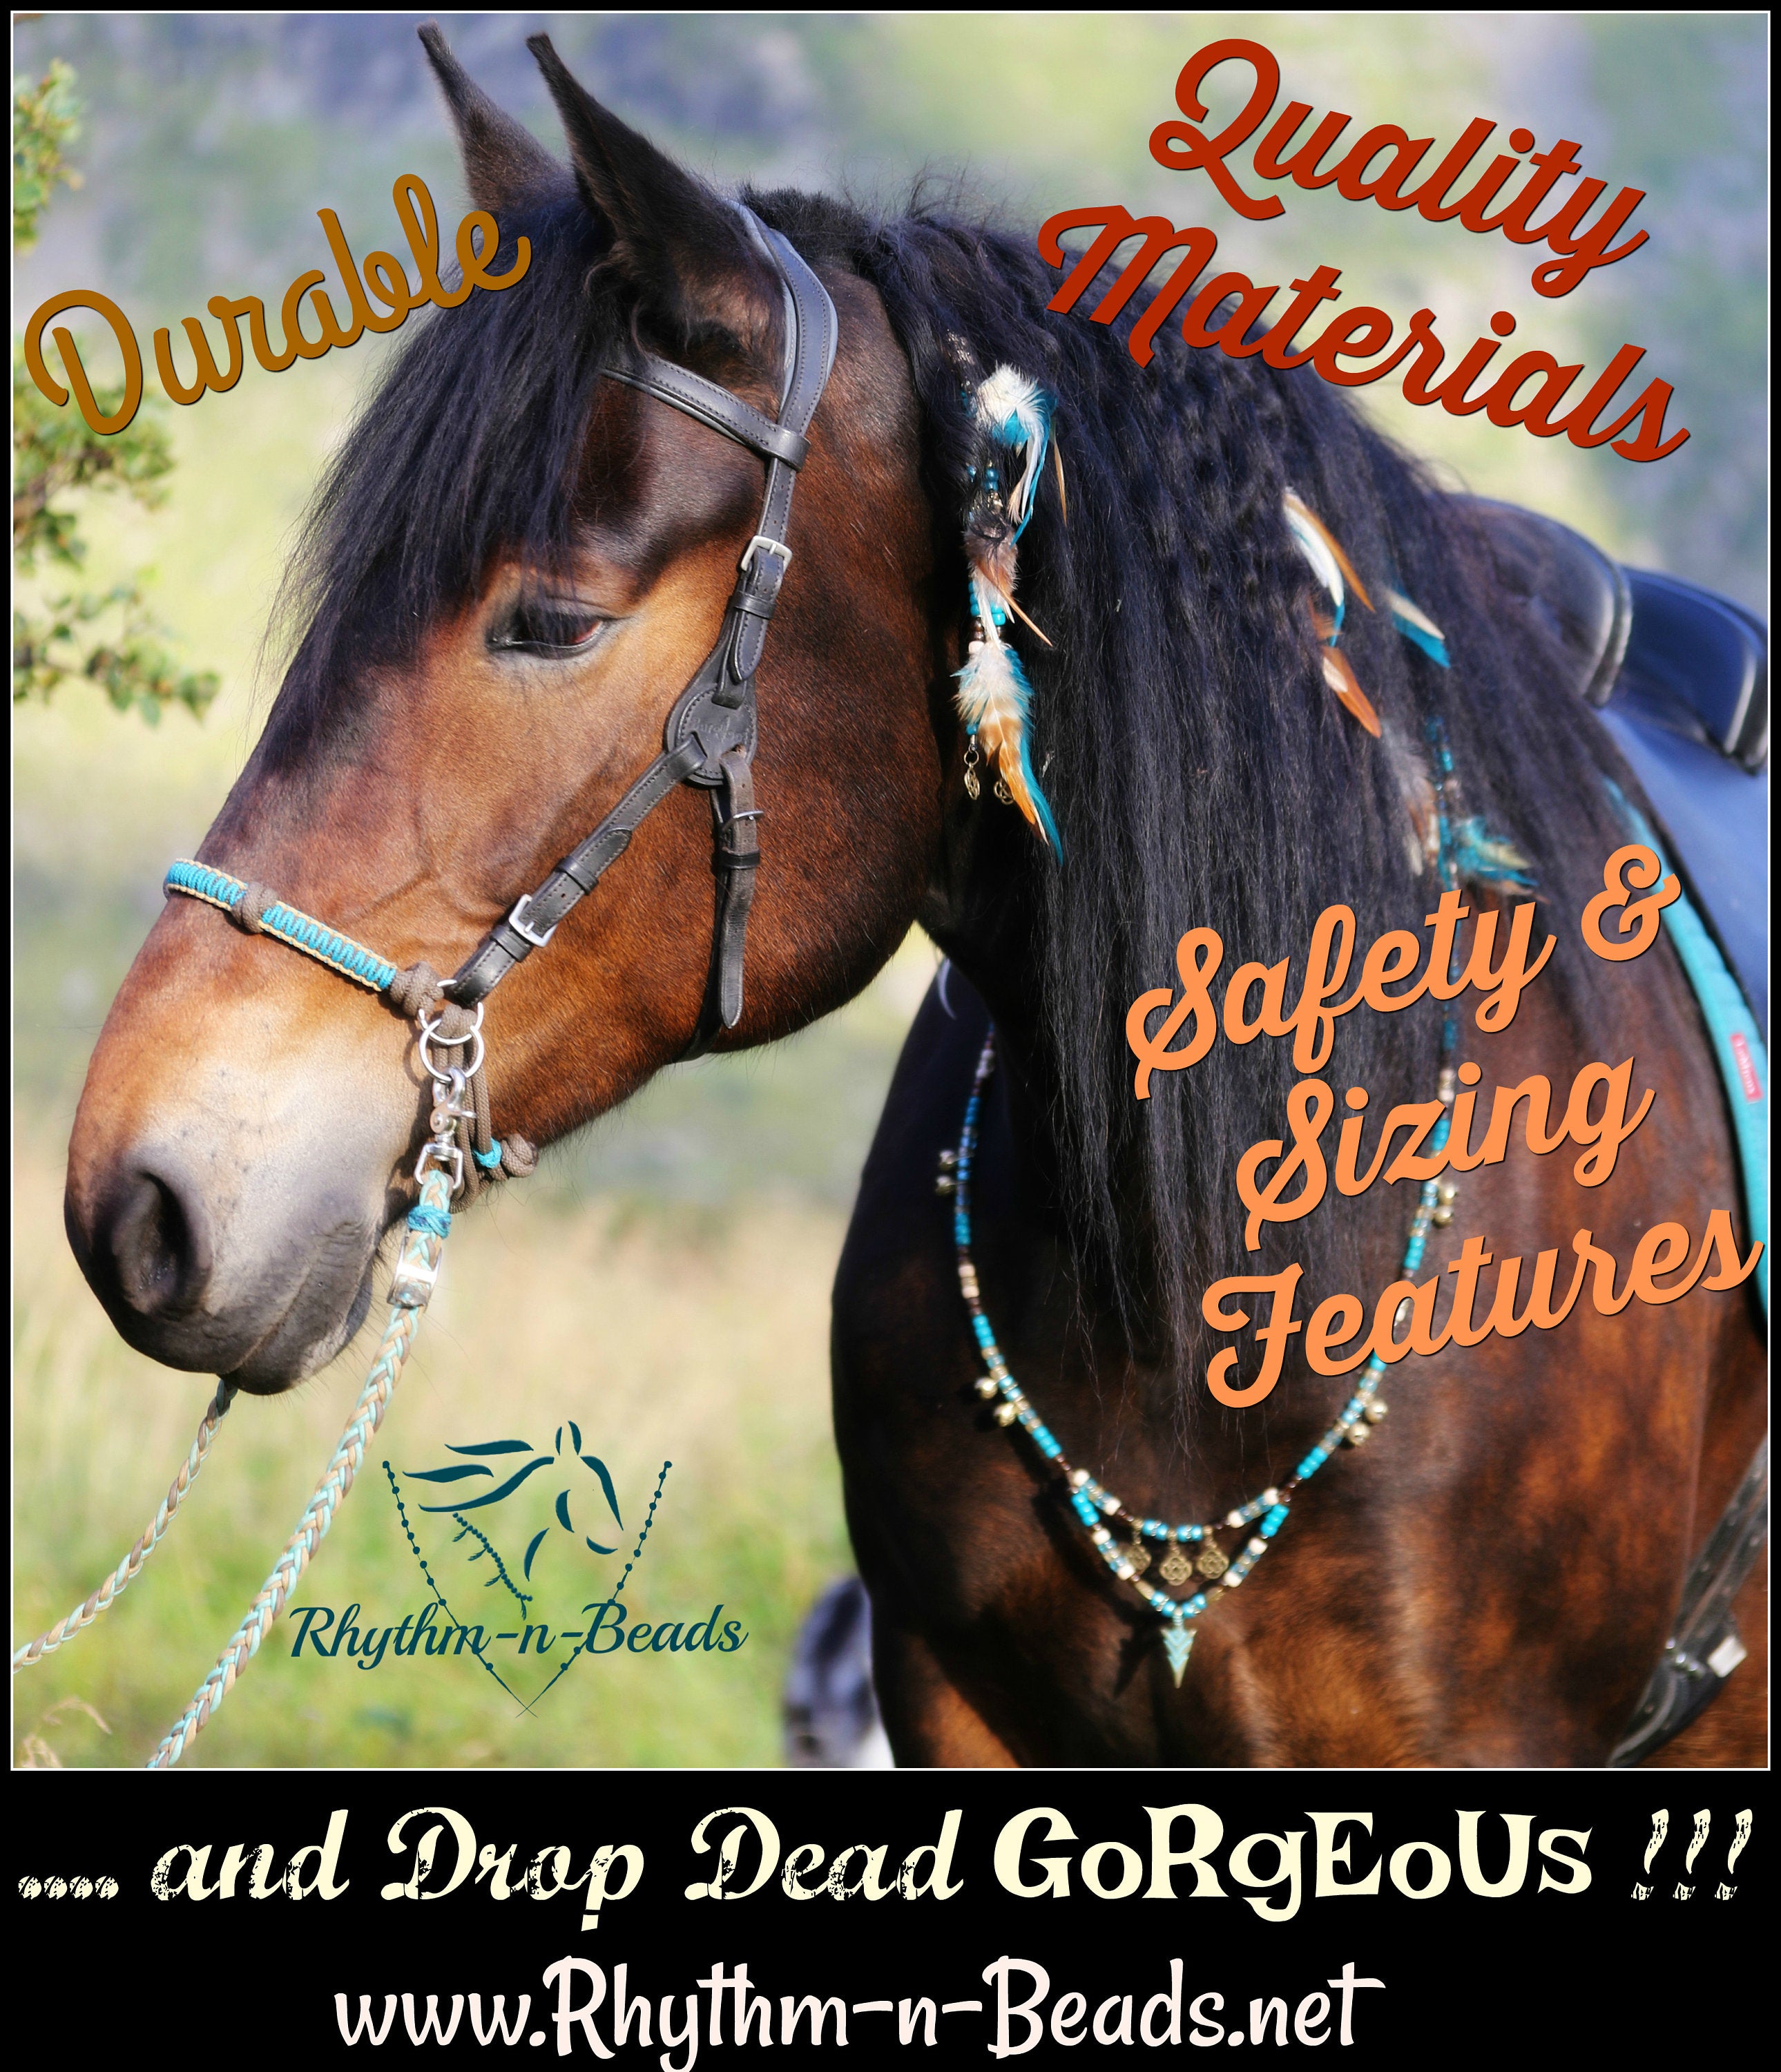 Rhythm Beads for Horses, BE MY VALENTINE, Trail Beads for Horses,Horse Necklace, Speed Beads, Natural Horsemanship, Horse Bells